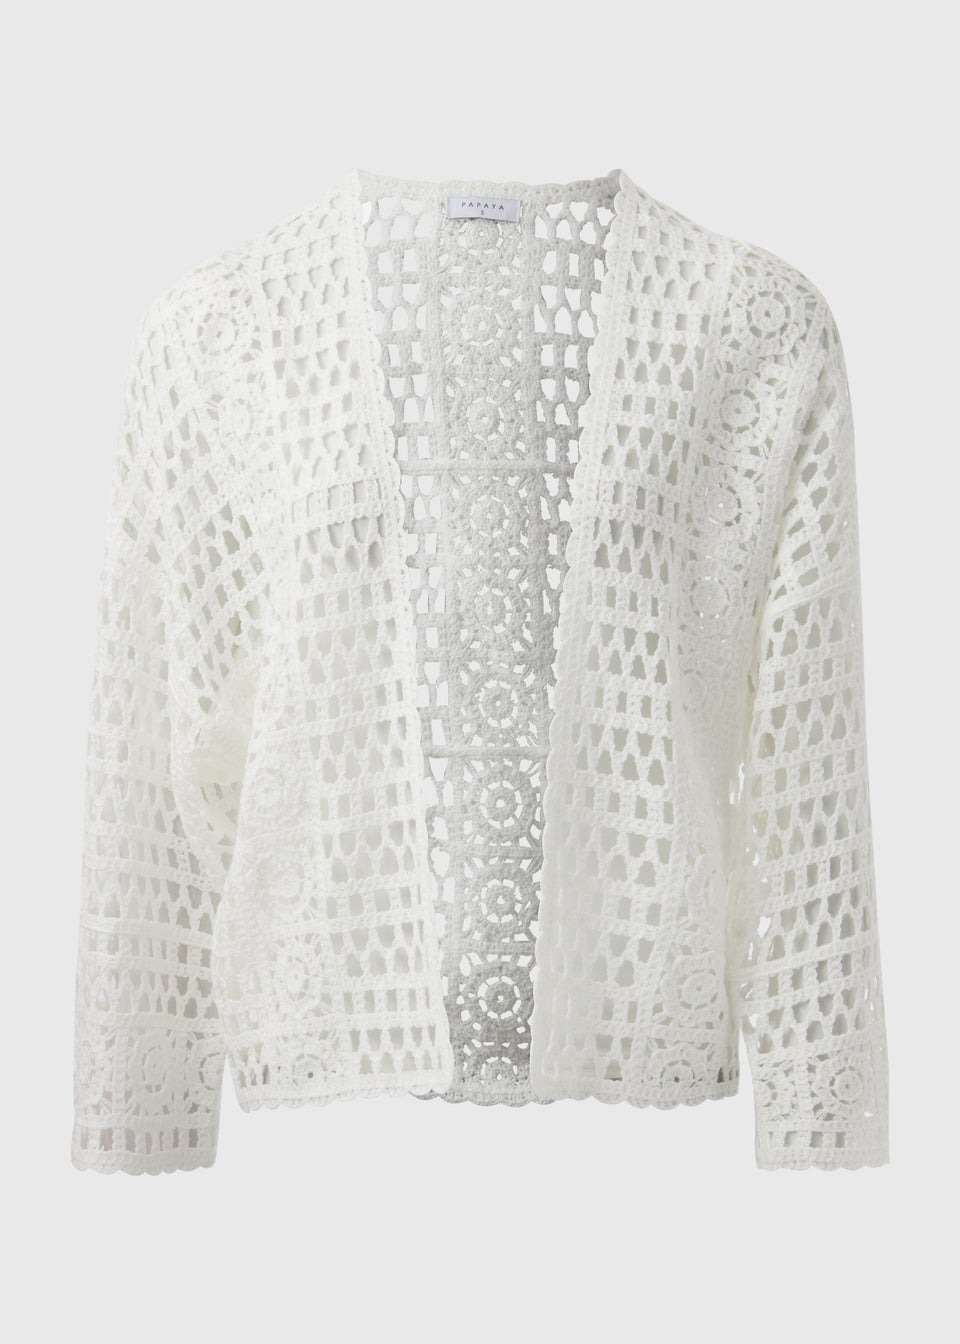 White Crochet Cardigan